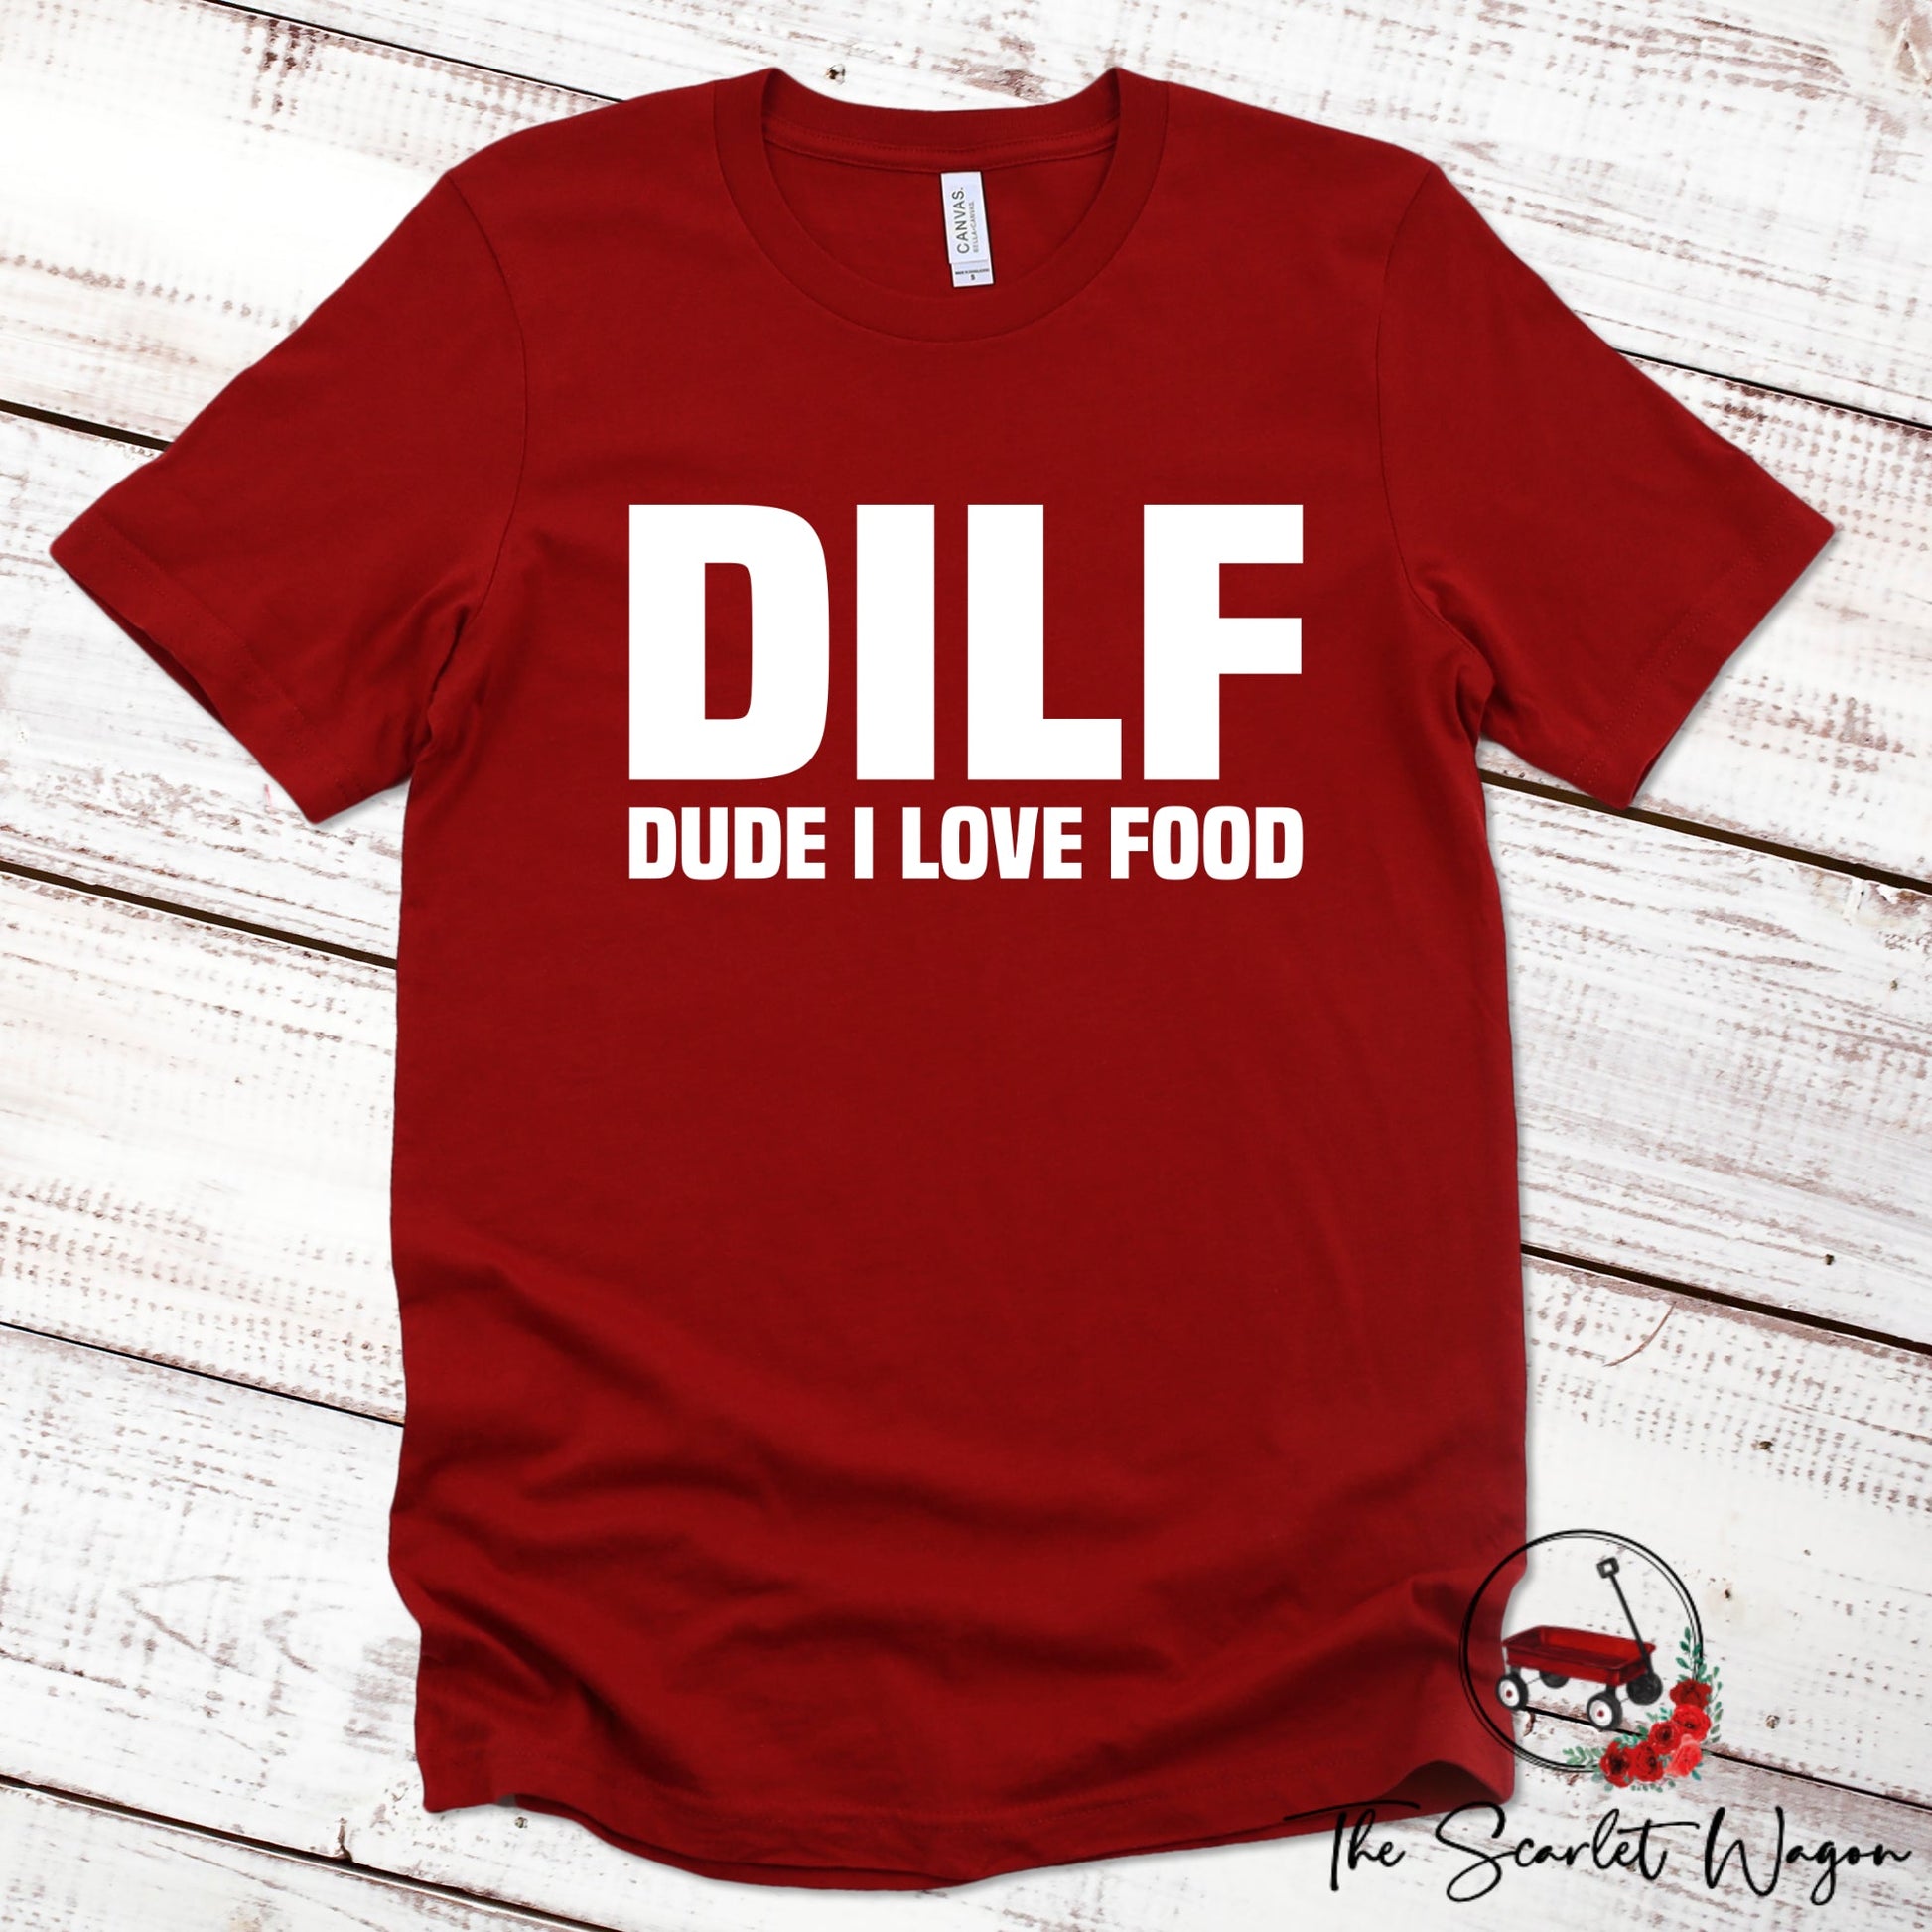 DILF - Dude I Love Food Premium Tee Scarlet Wagon Red XS 